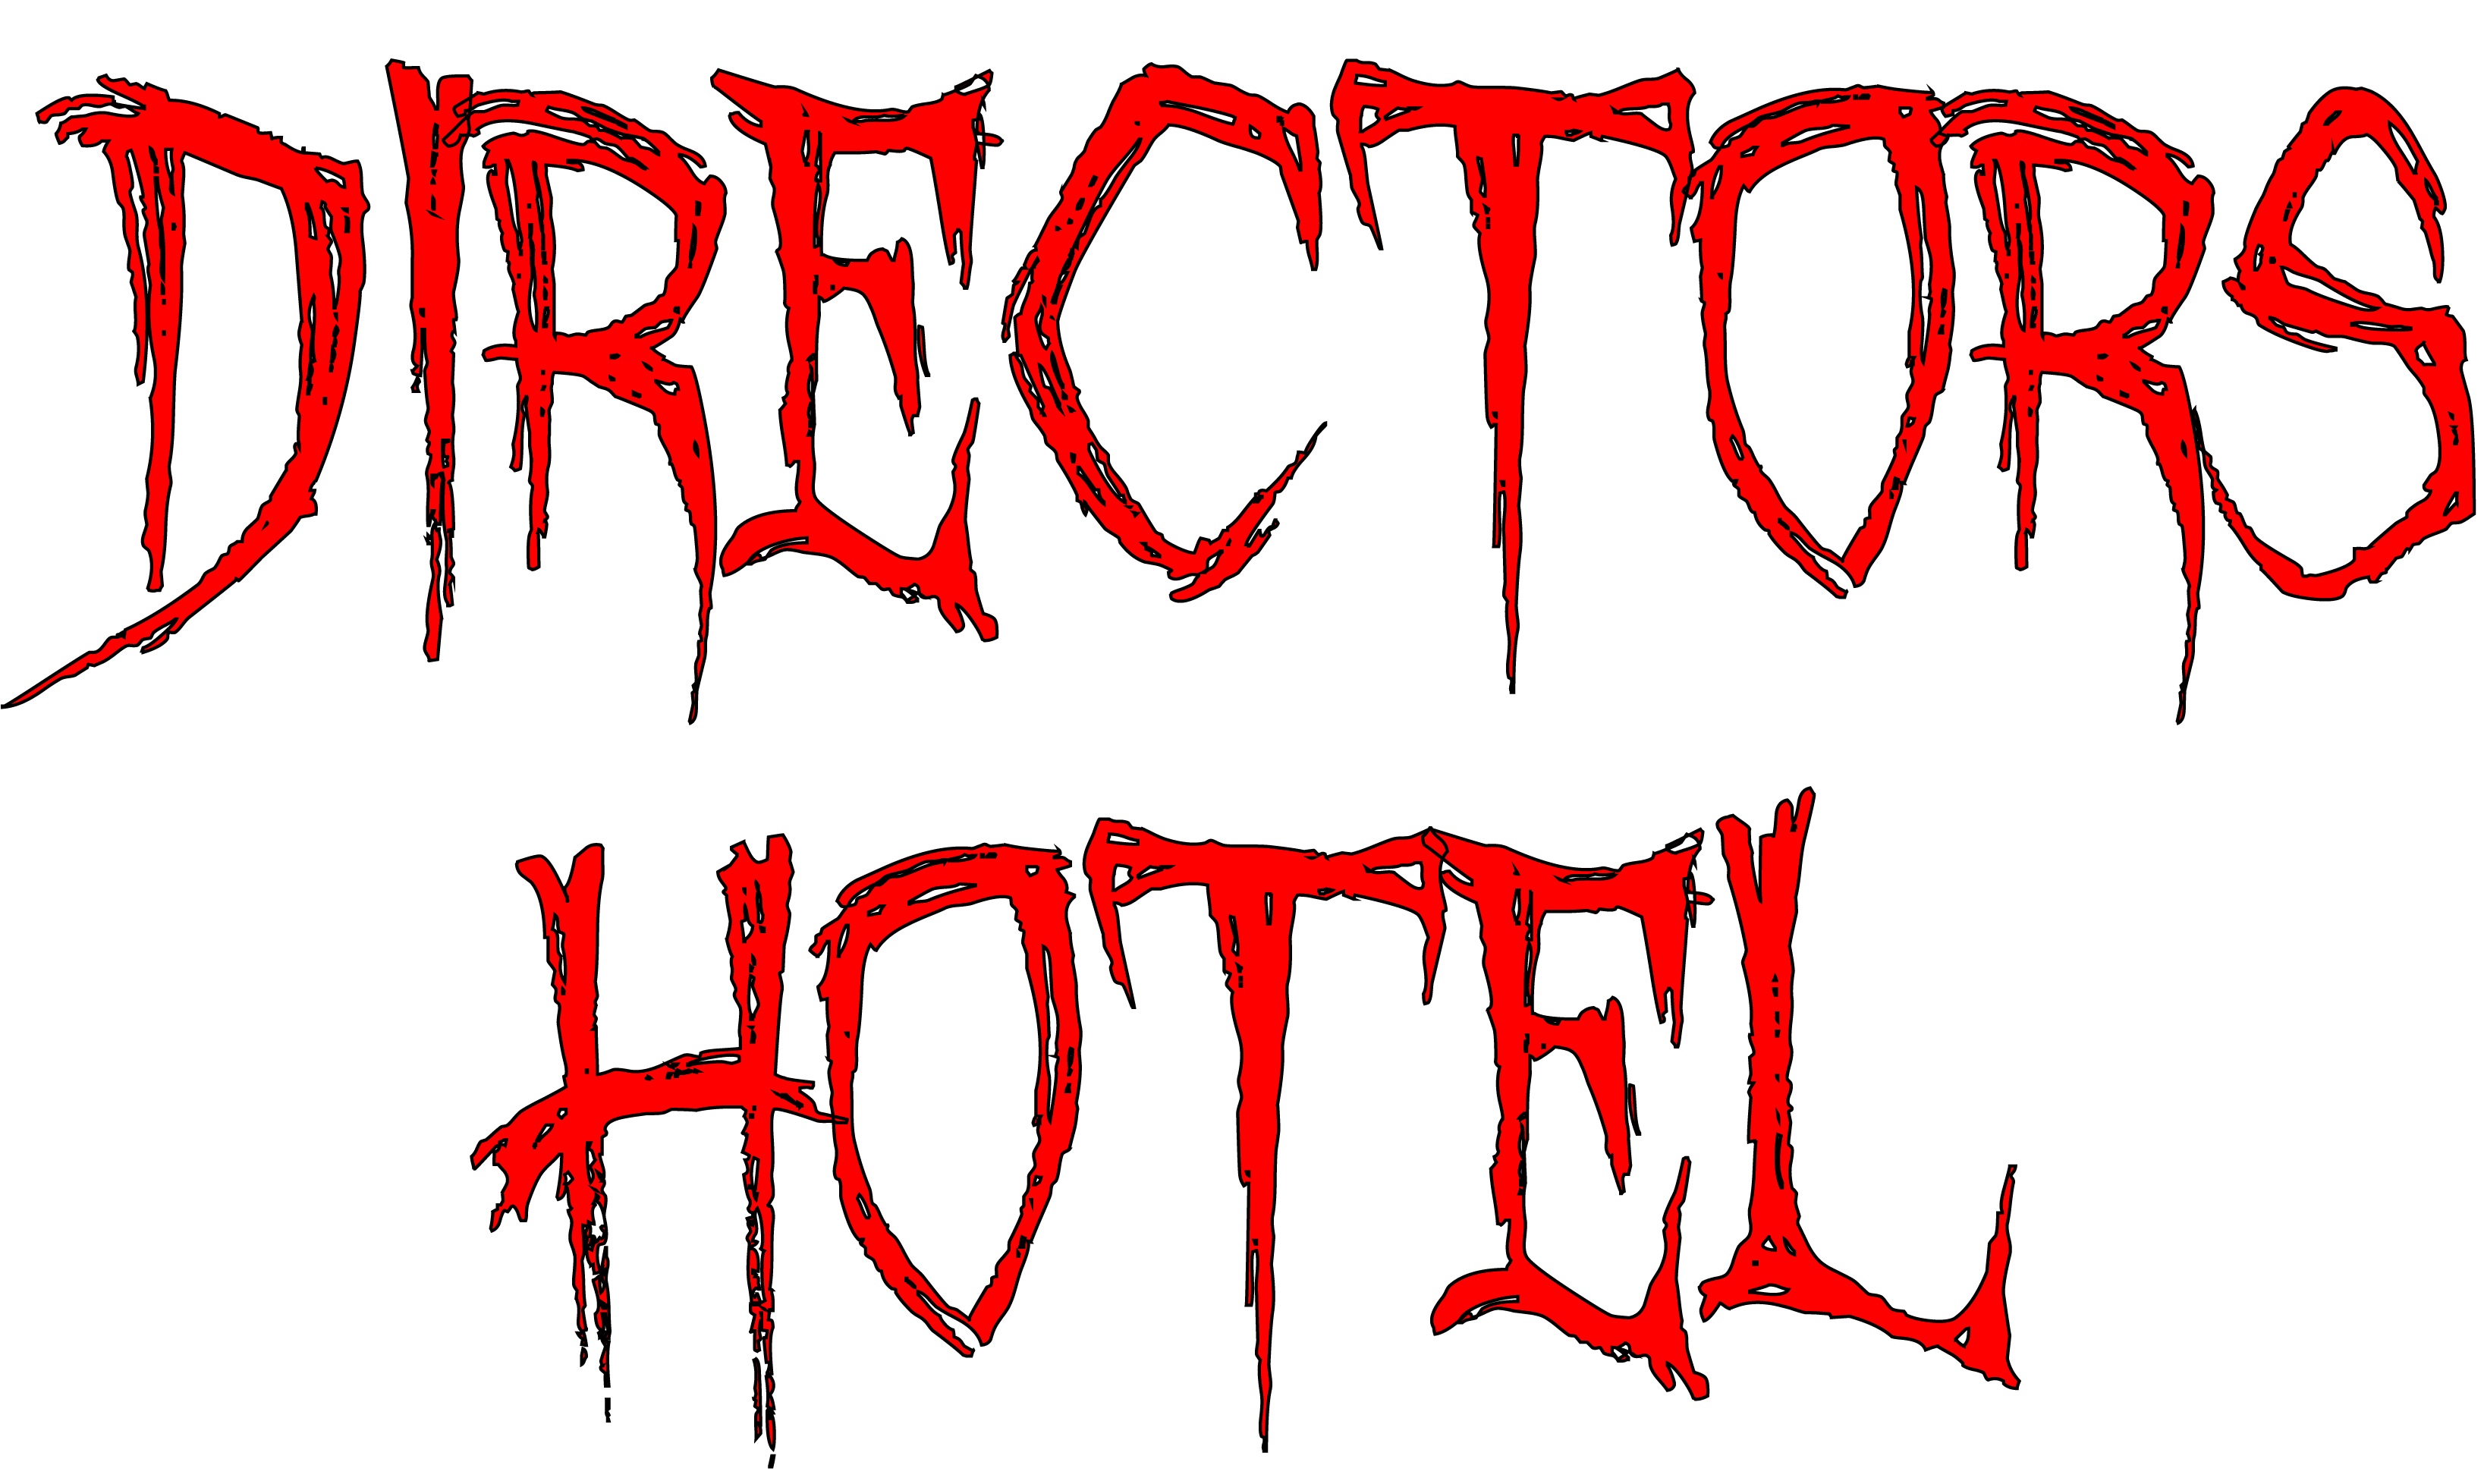 Director's Hotel